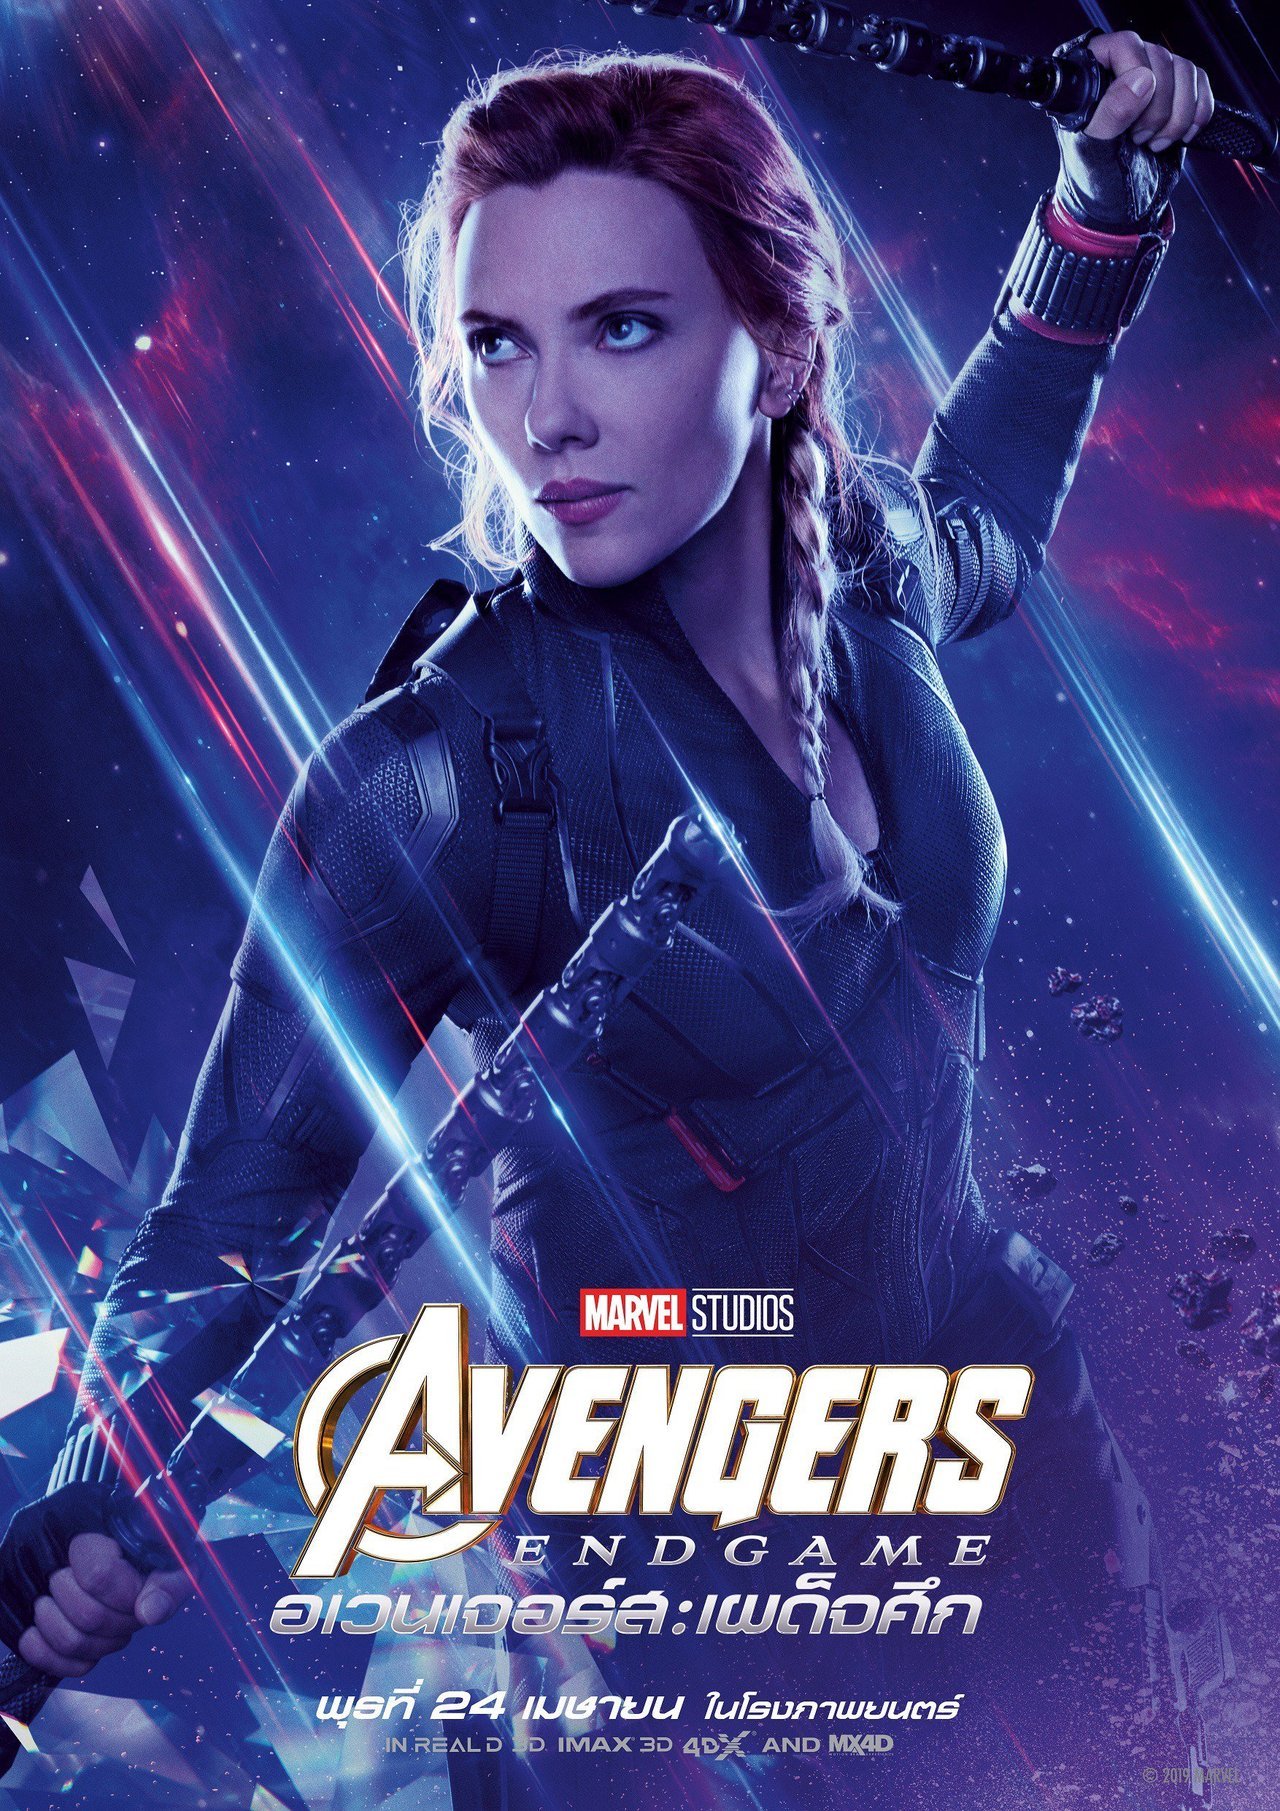 Natasha Romanoff Poster Marvel Black Widow. This Marvel and